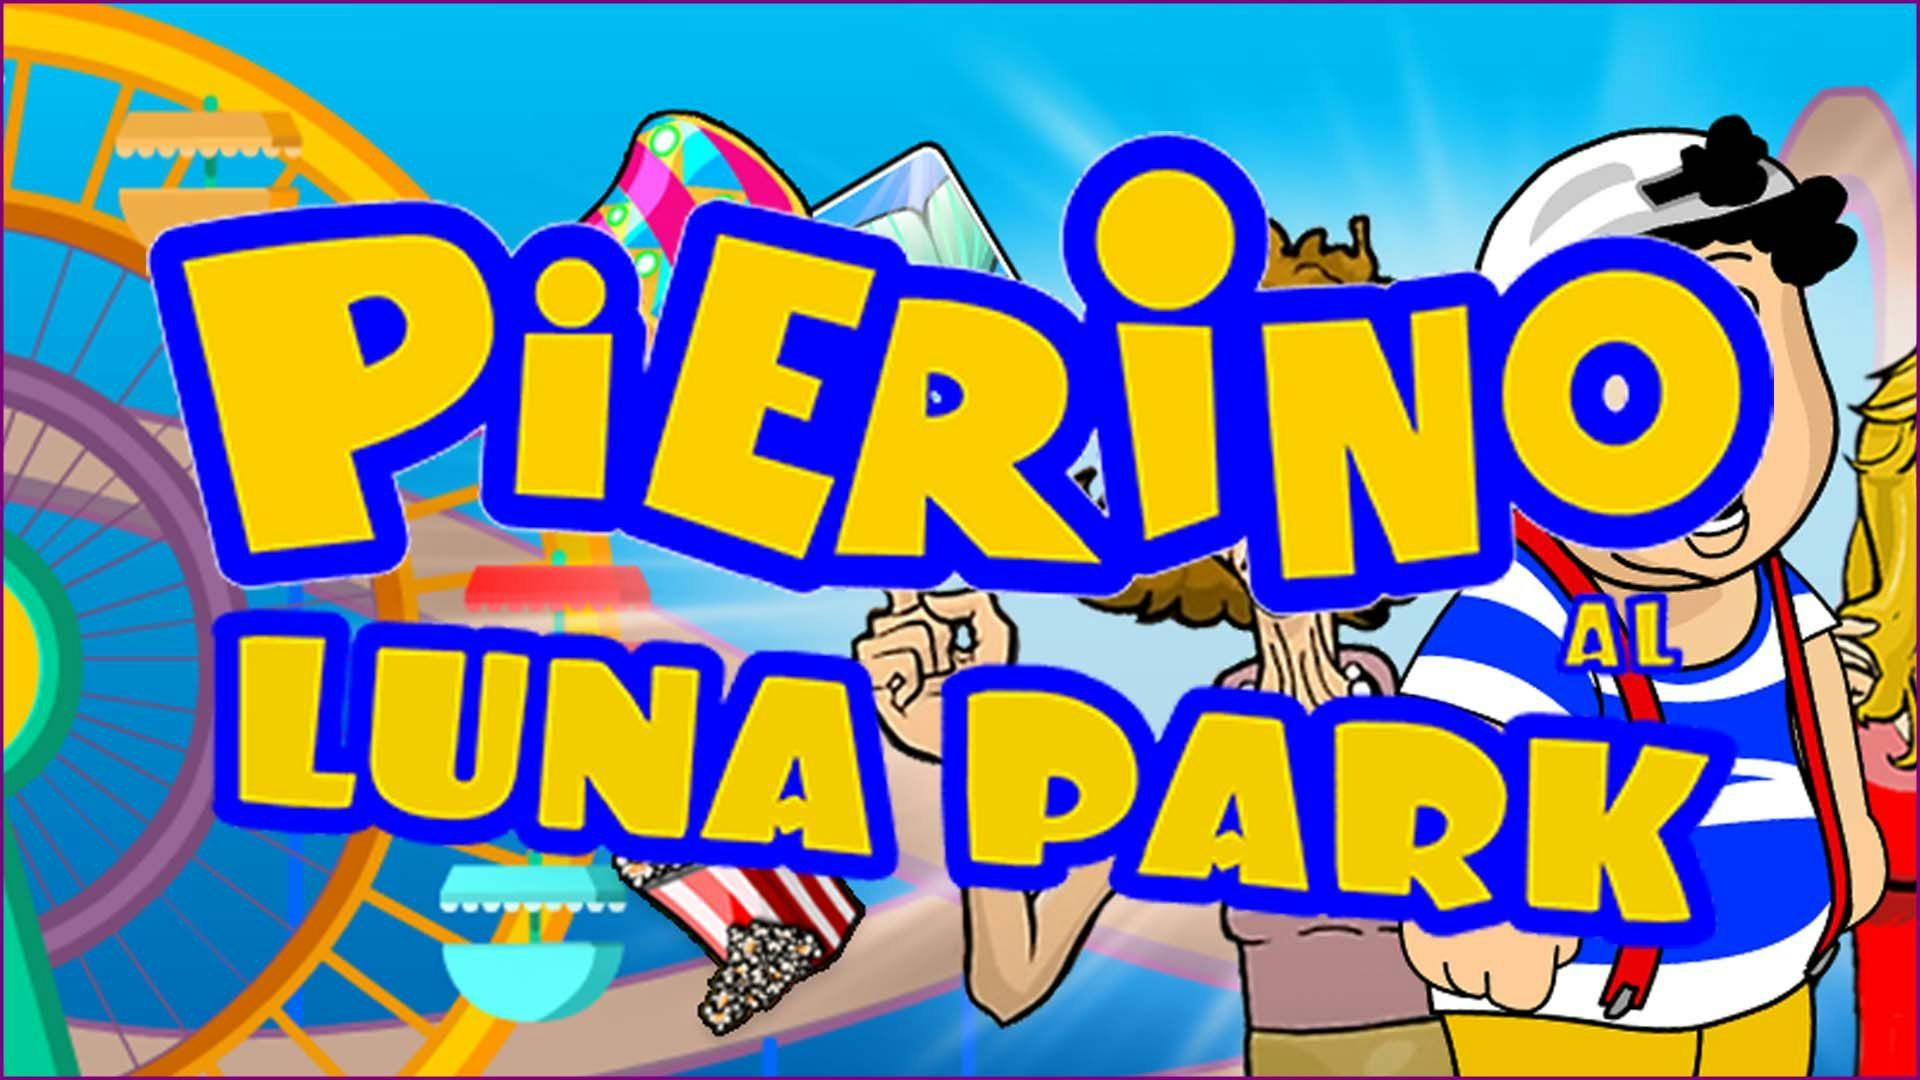 Pierino Al Luna Park